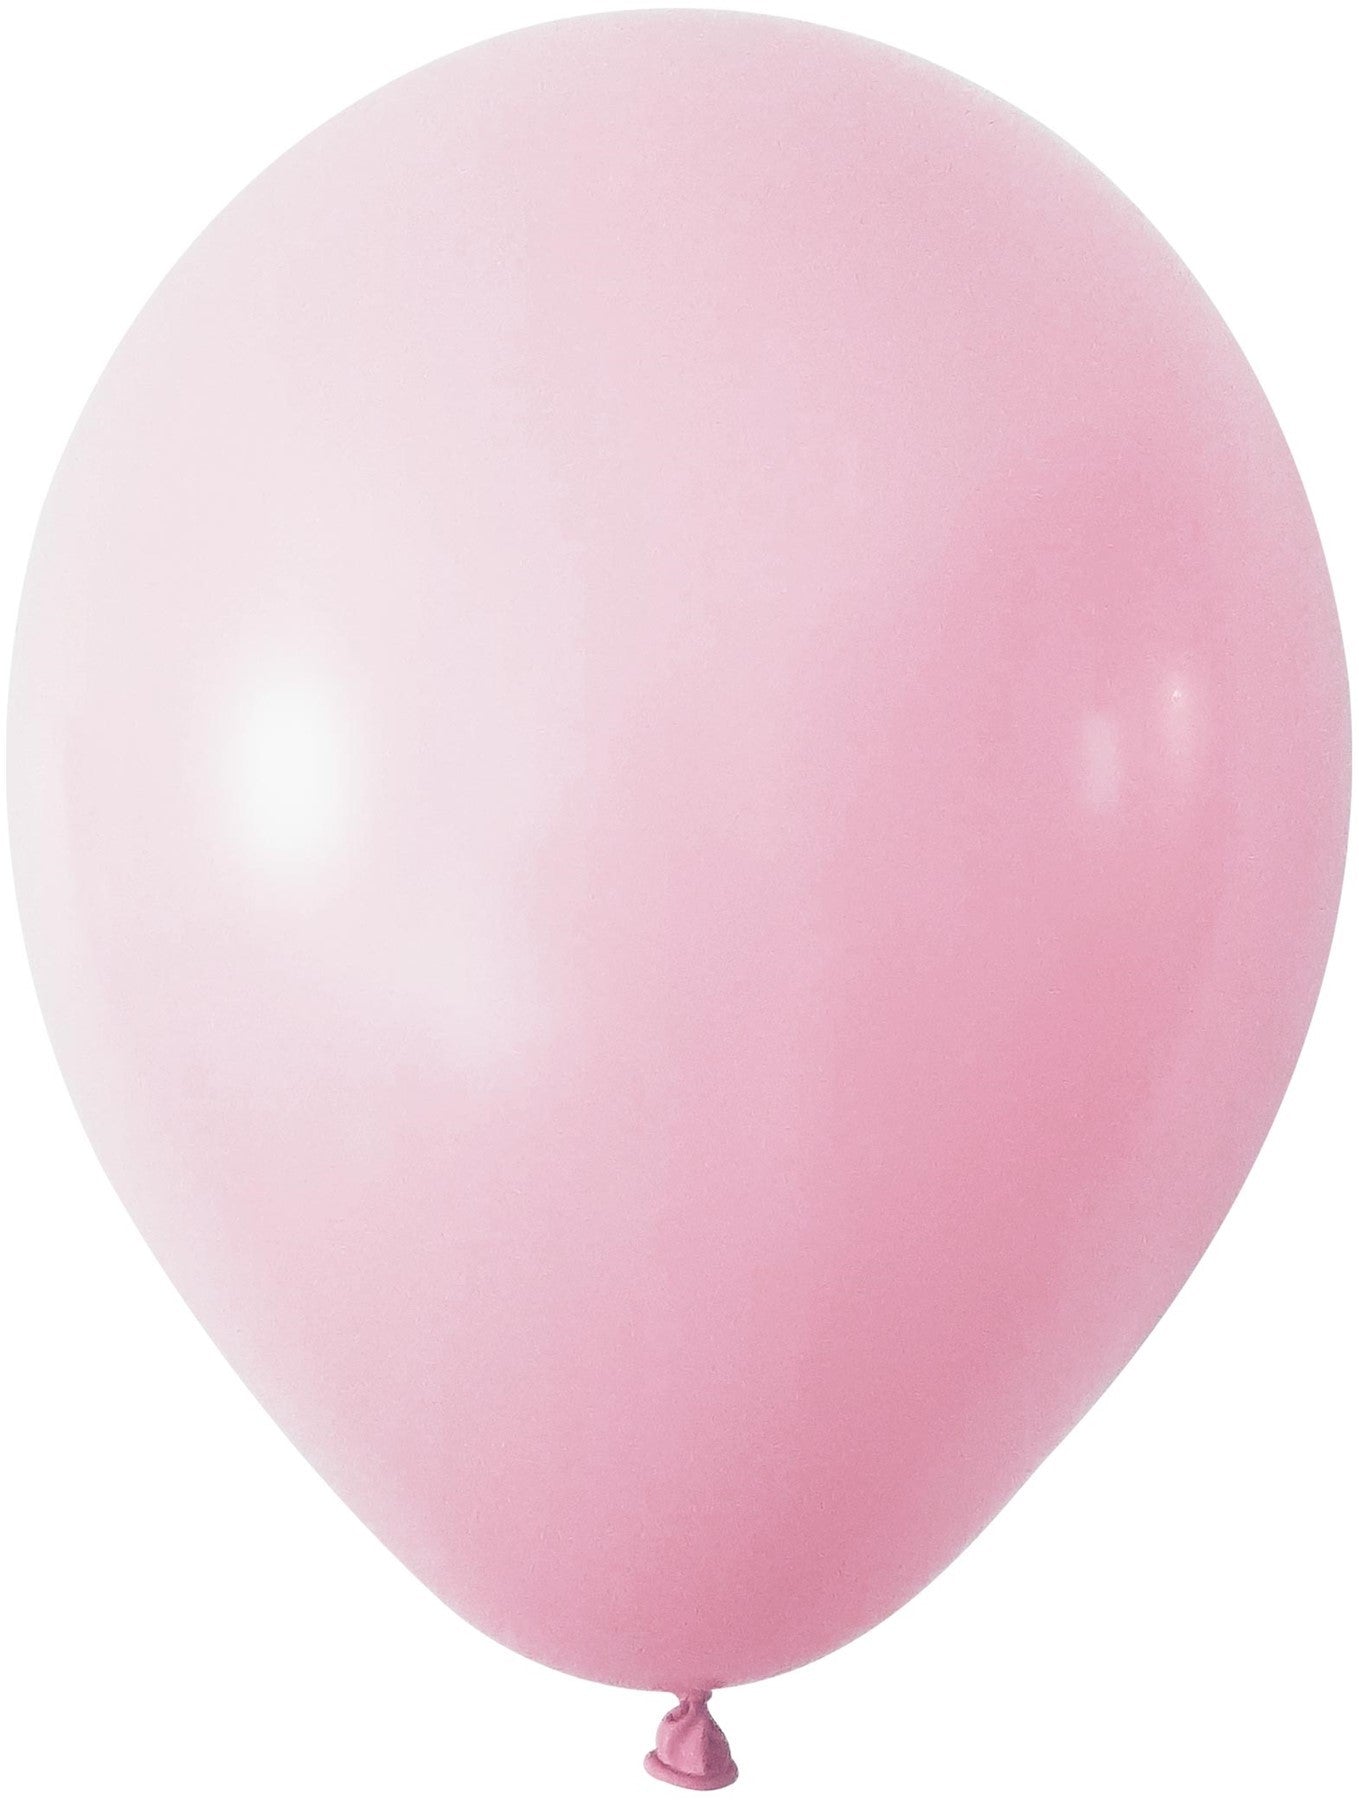 View Macaron Pink Latex Balloon 12 inch Pk 100 information